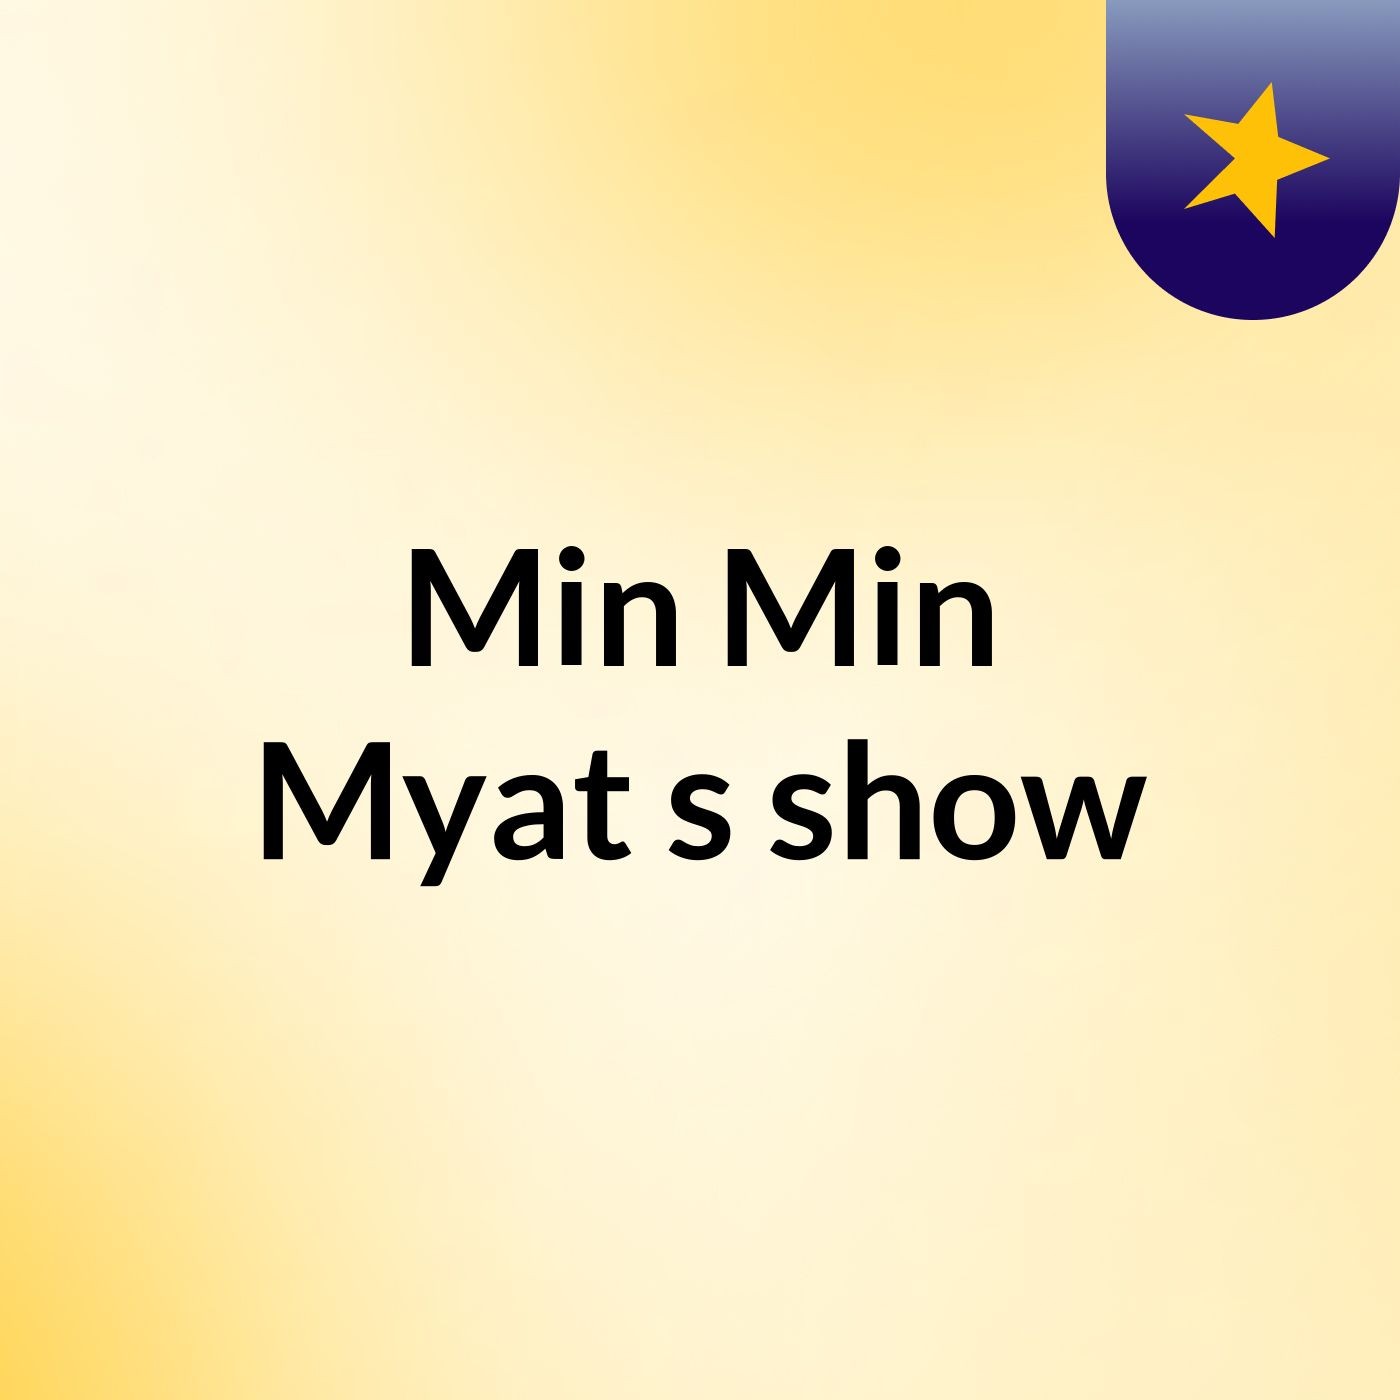 Min Min Myat's show